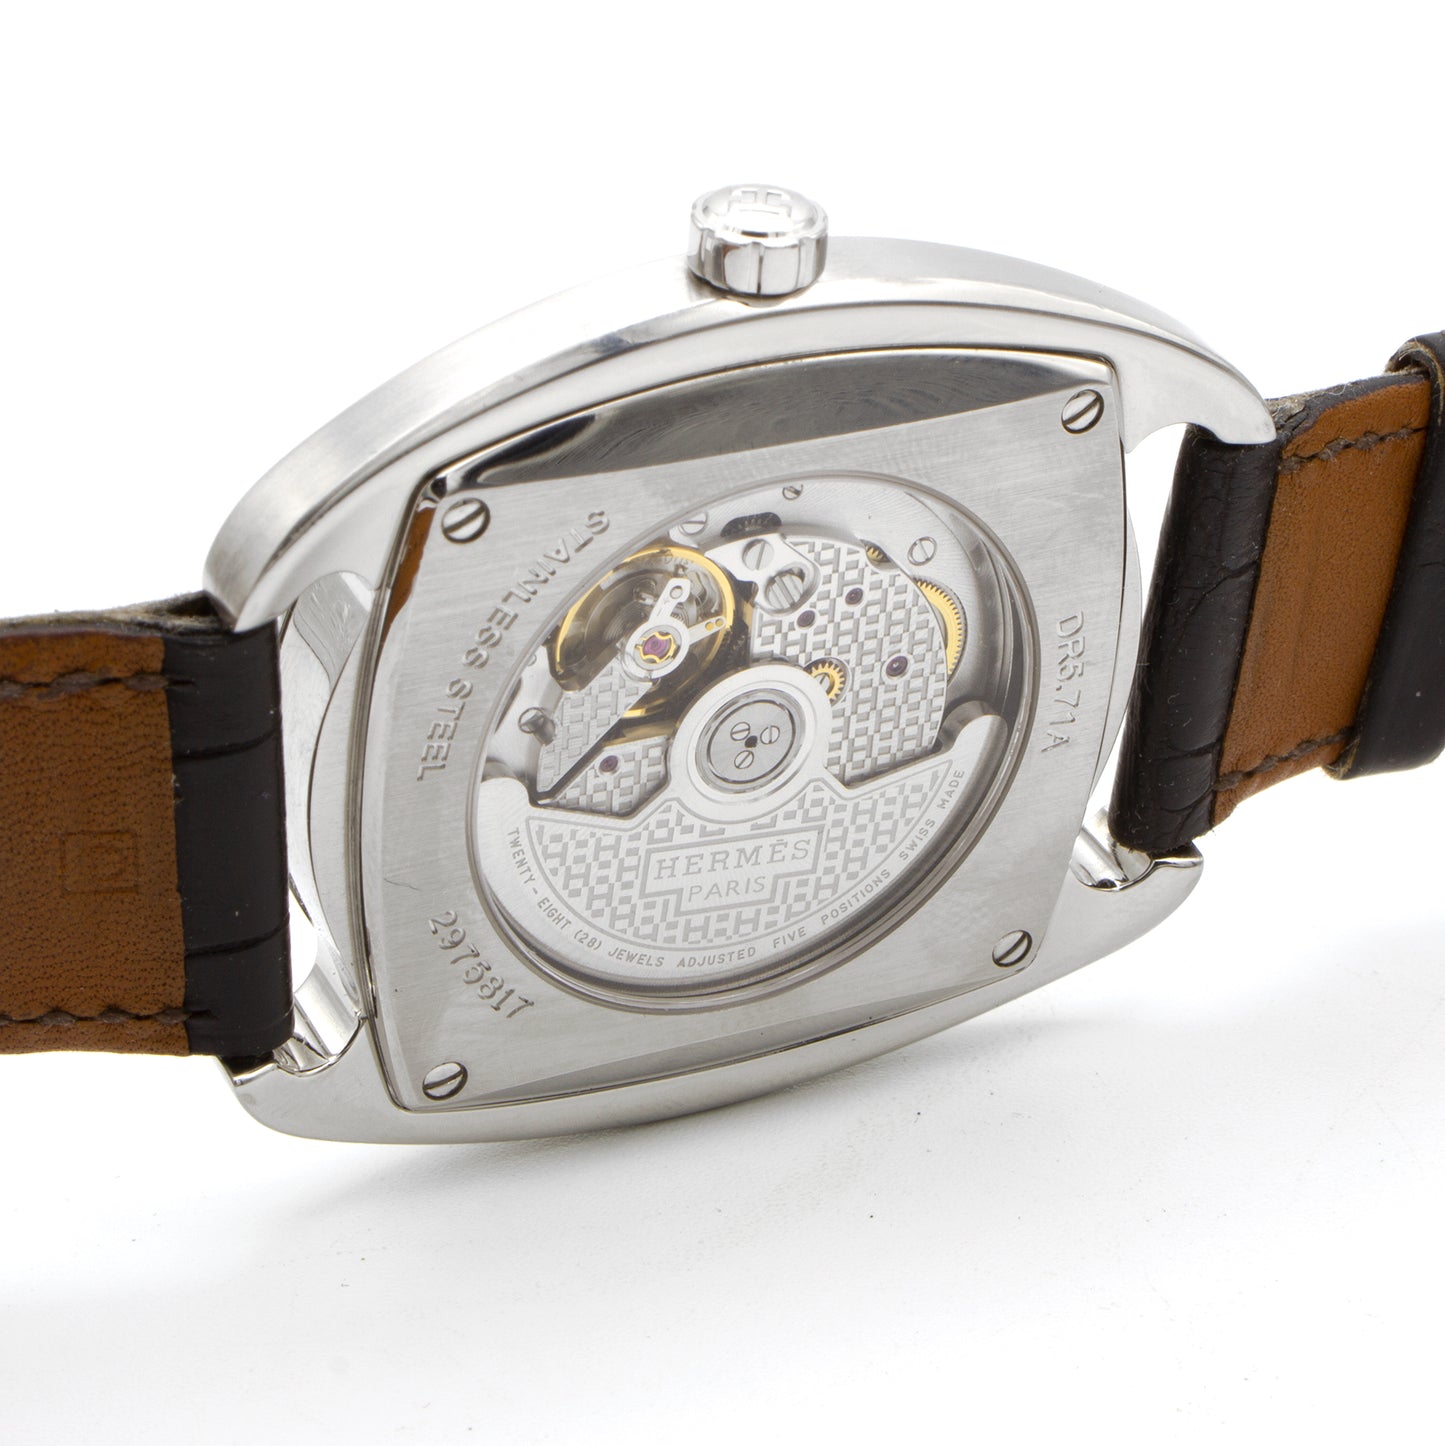 Hermès Dressage DR5.71A watch